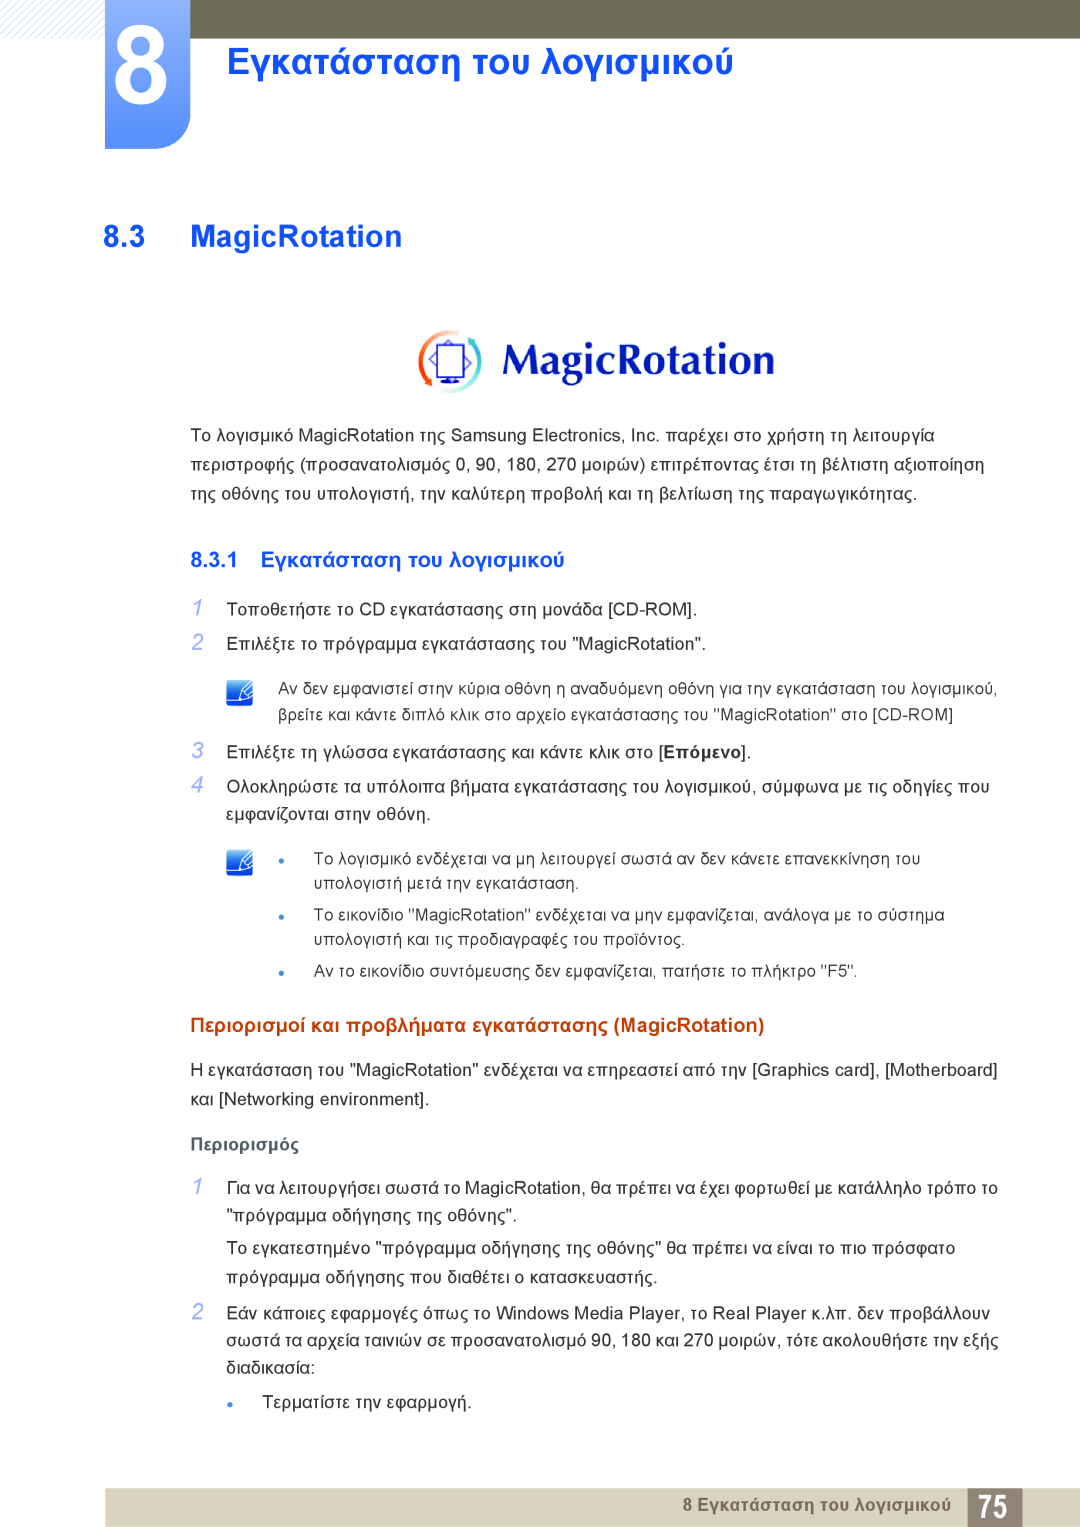 Samsung LS22C45KMS/EN manual MagicRotation, 8.3.1 Εγκατάσταση του λογισμικού, 8 Εγκατάσταση του λογισμικού, Περιορισμός 